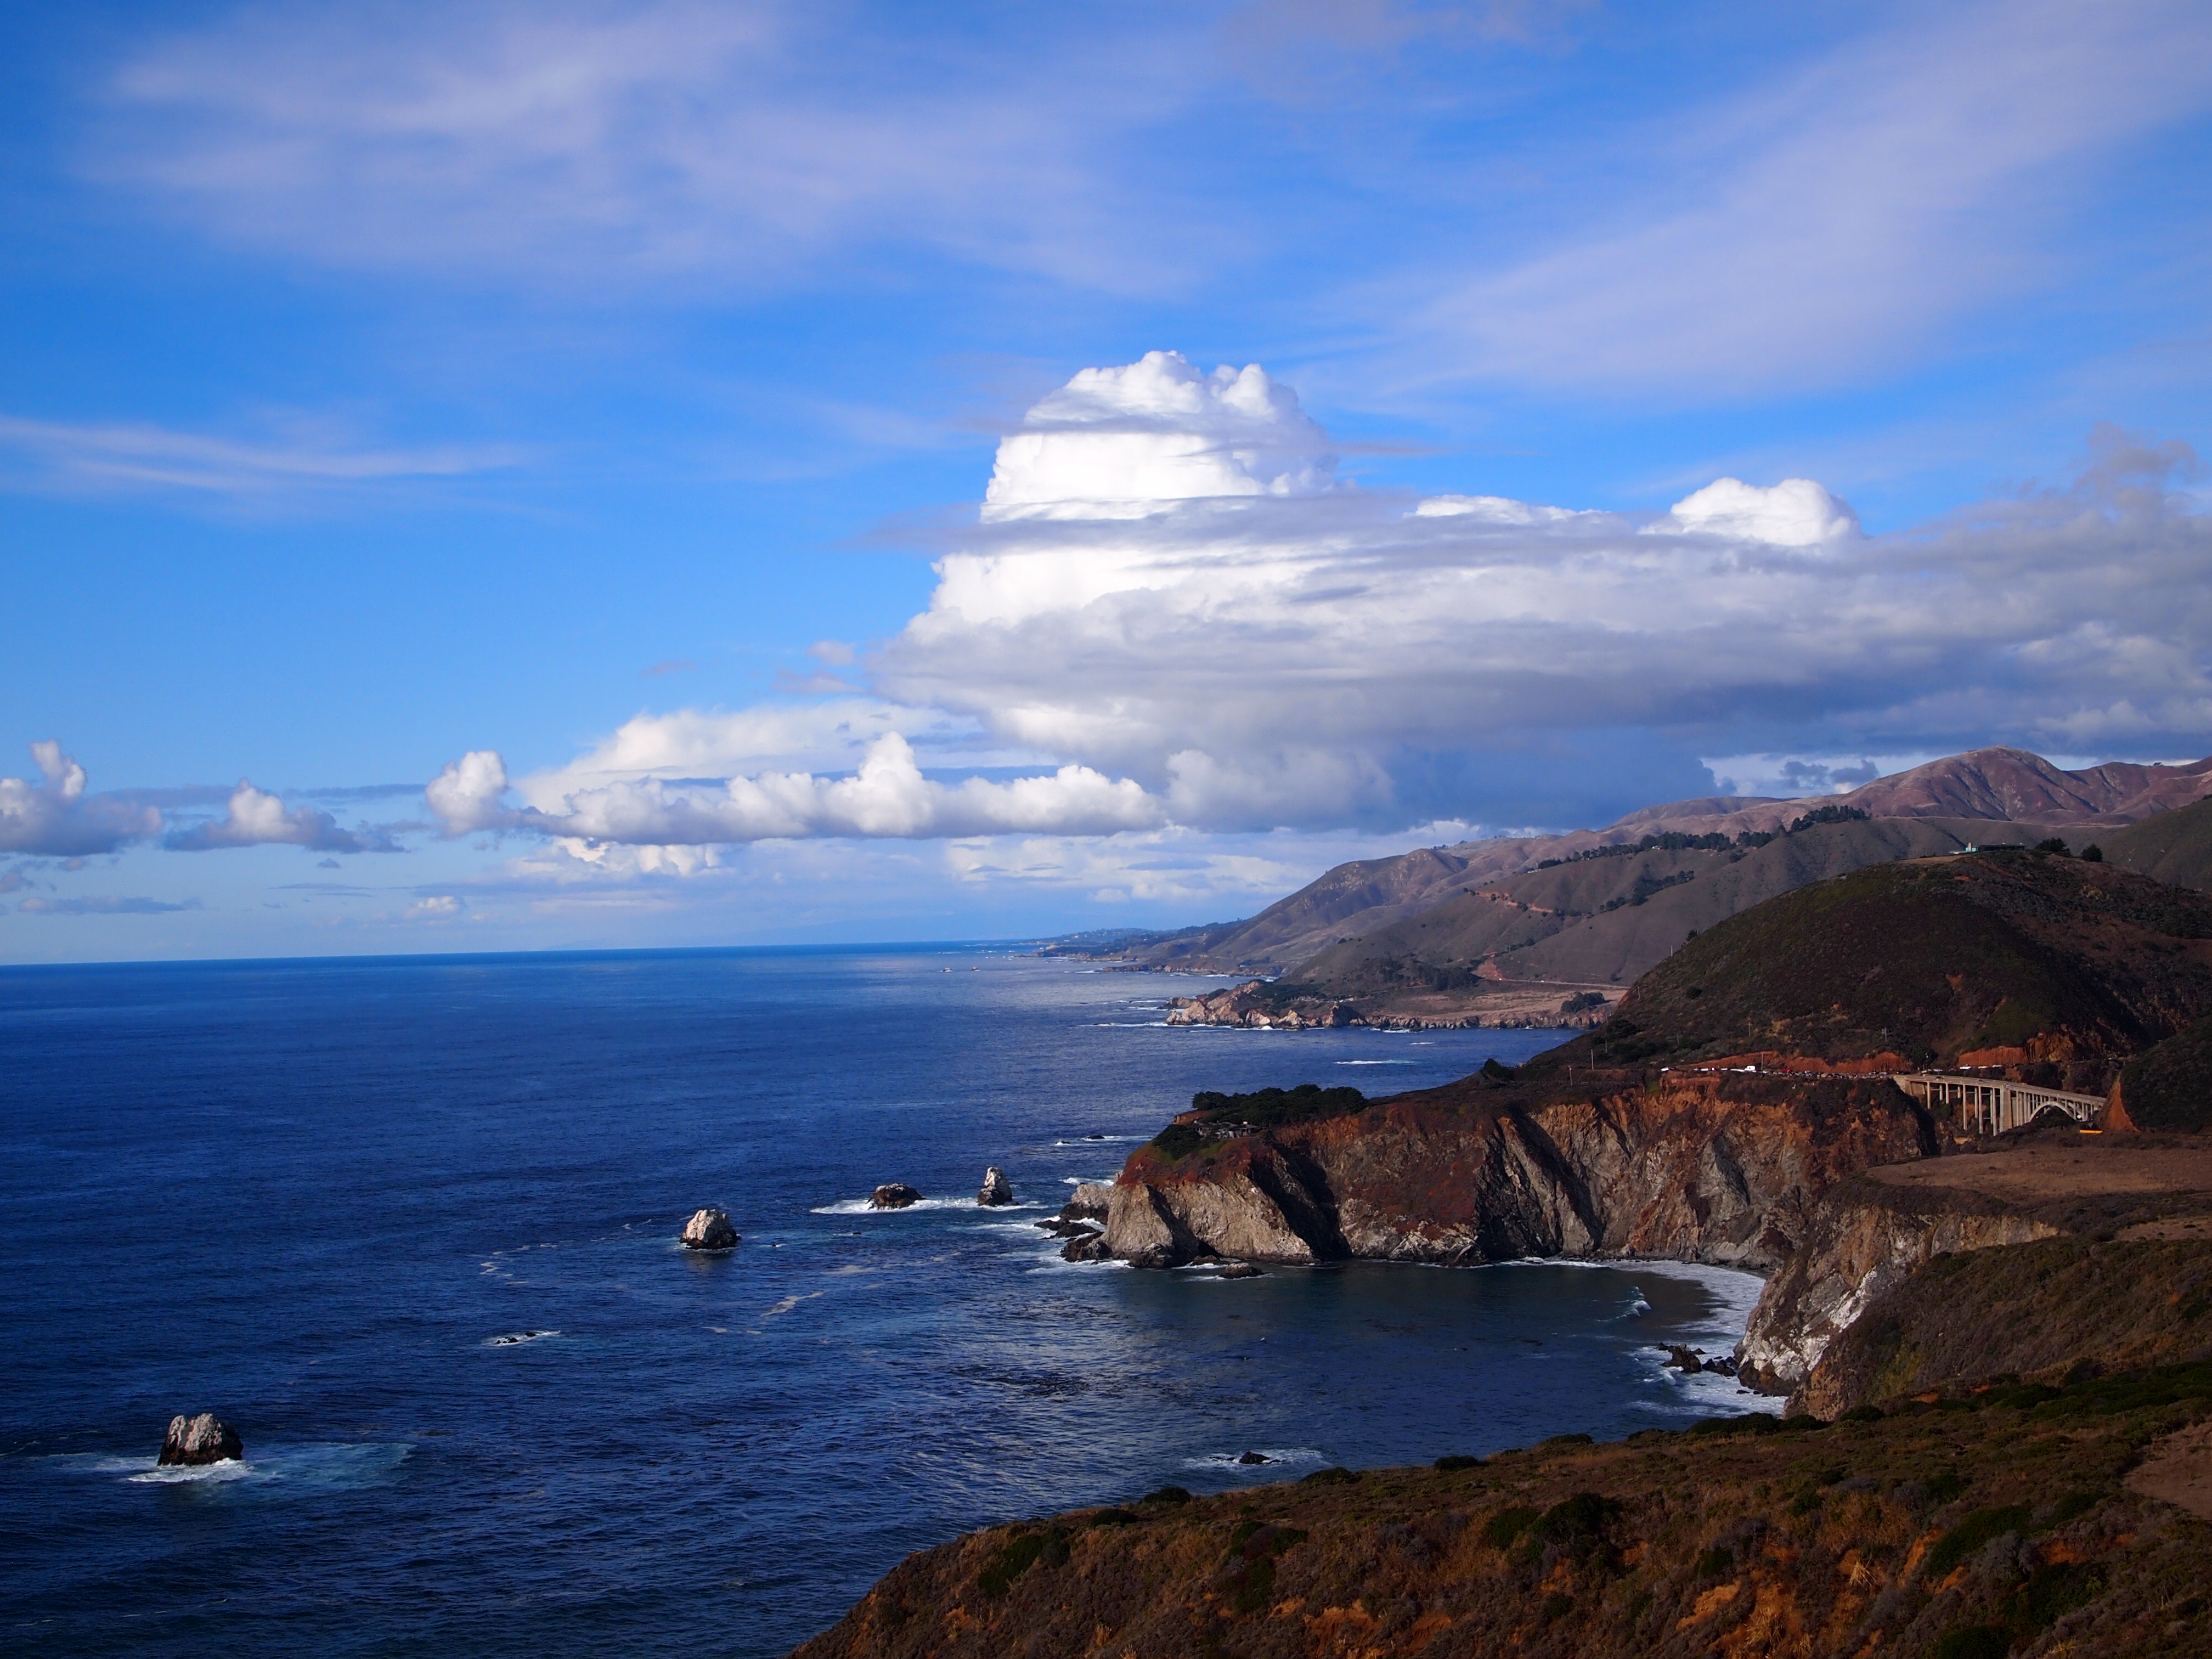 view of the California coastline